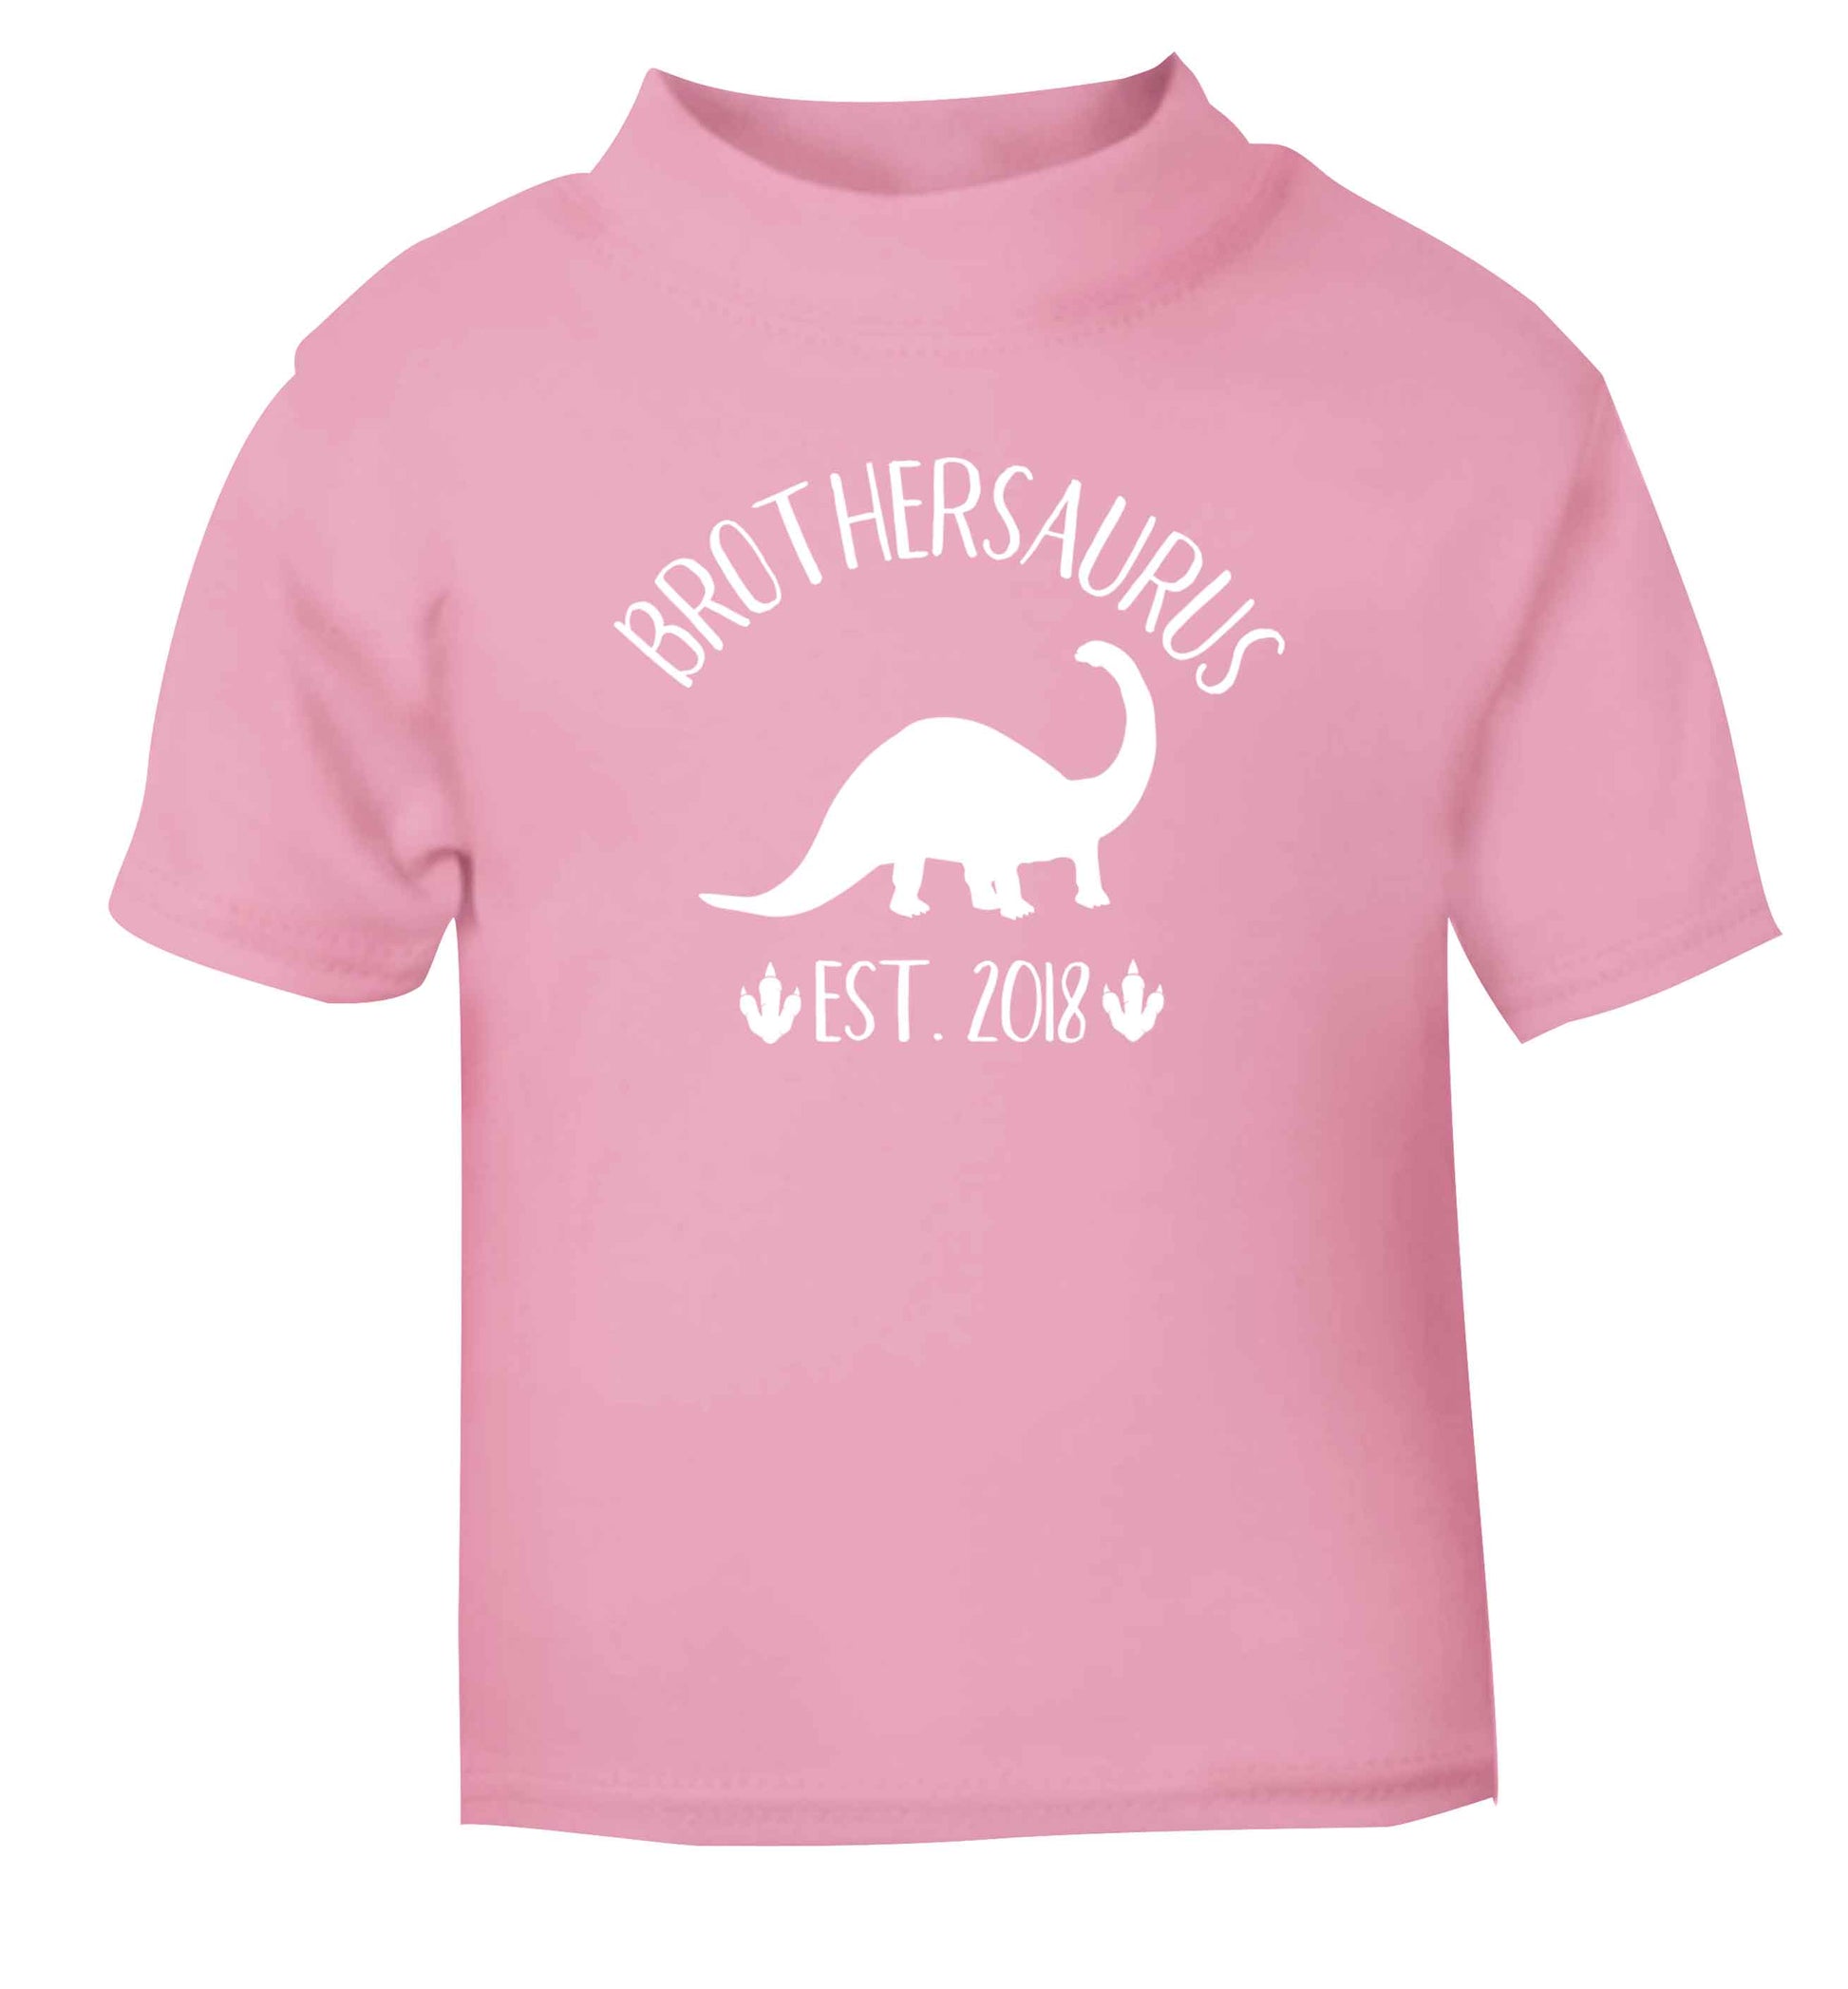 Personalised brothersaurus since (custom date) light pink Baby Toddler Tshirt 2 Years